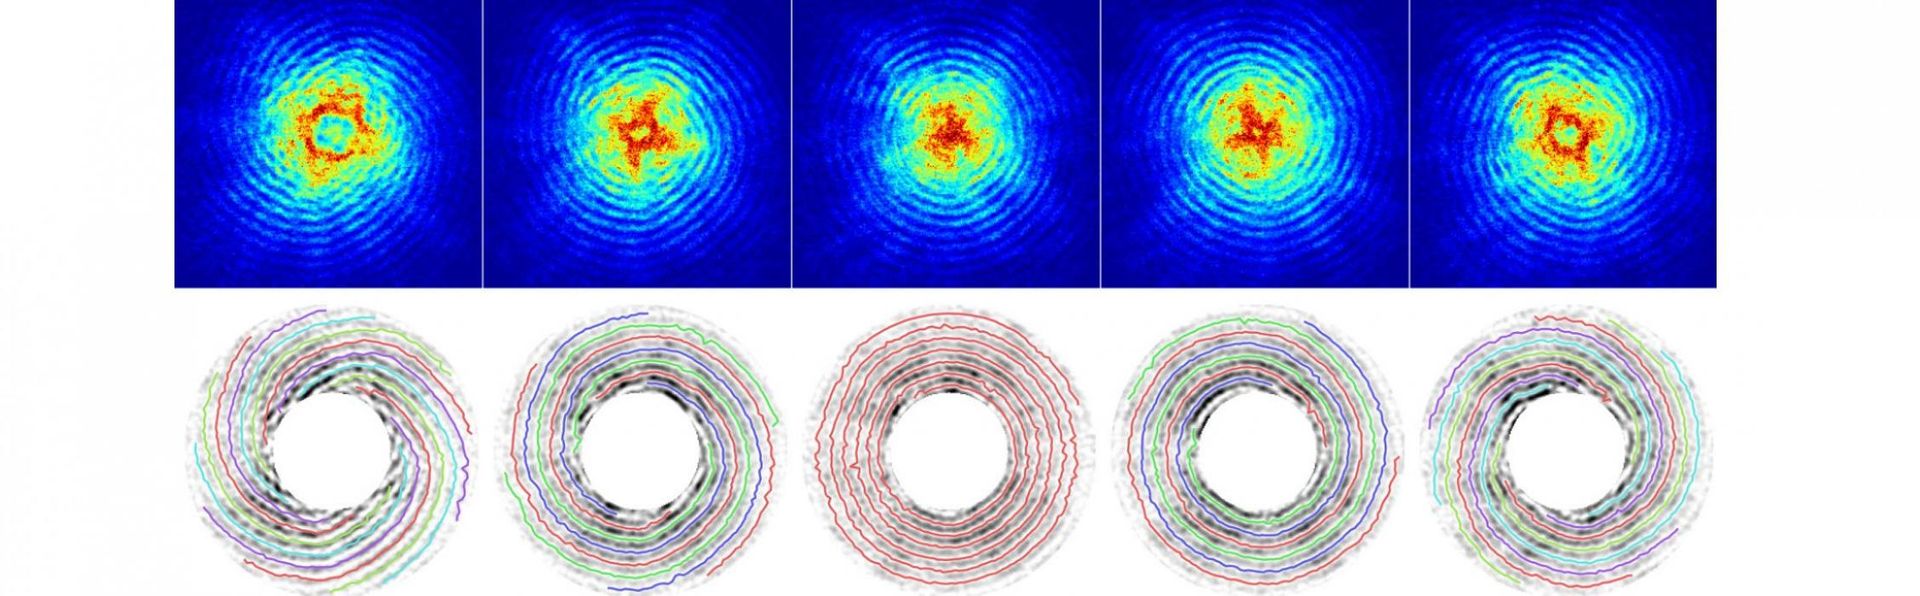 Photo of spiral interference pattern